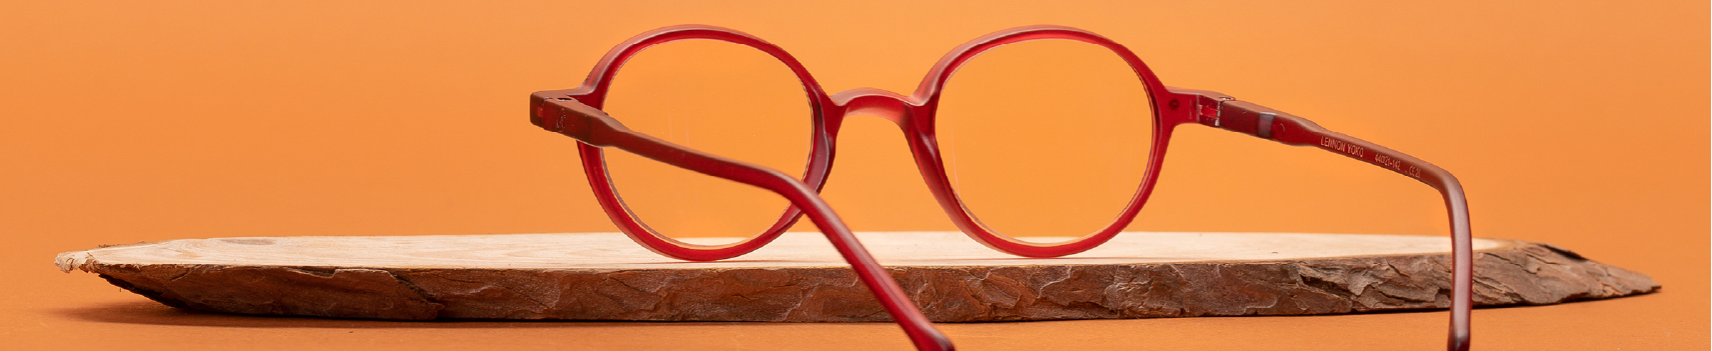 Óculos de Leitura | Urboow Fashionable Eyewear